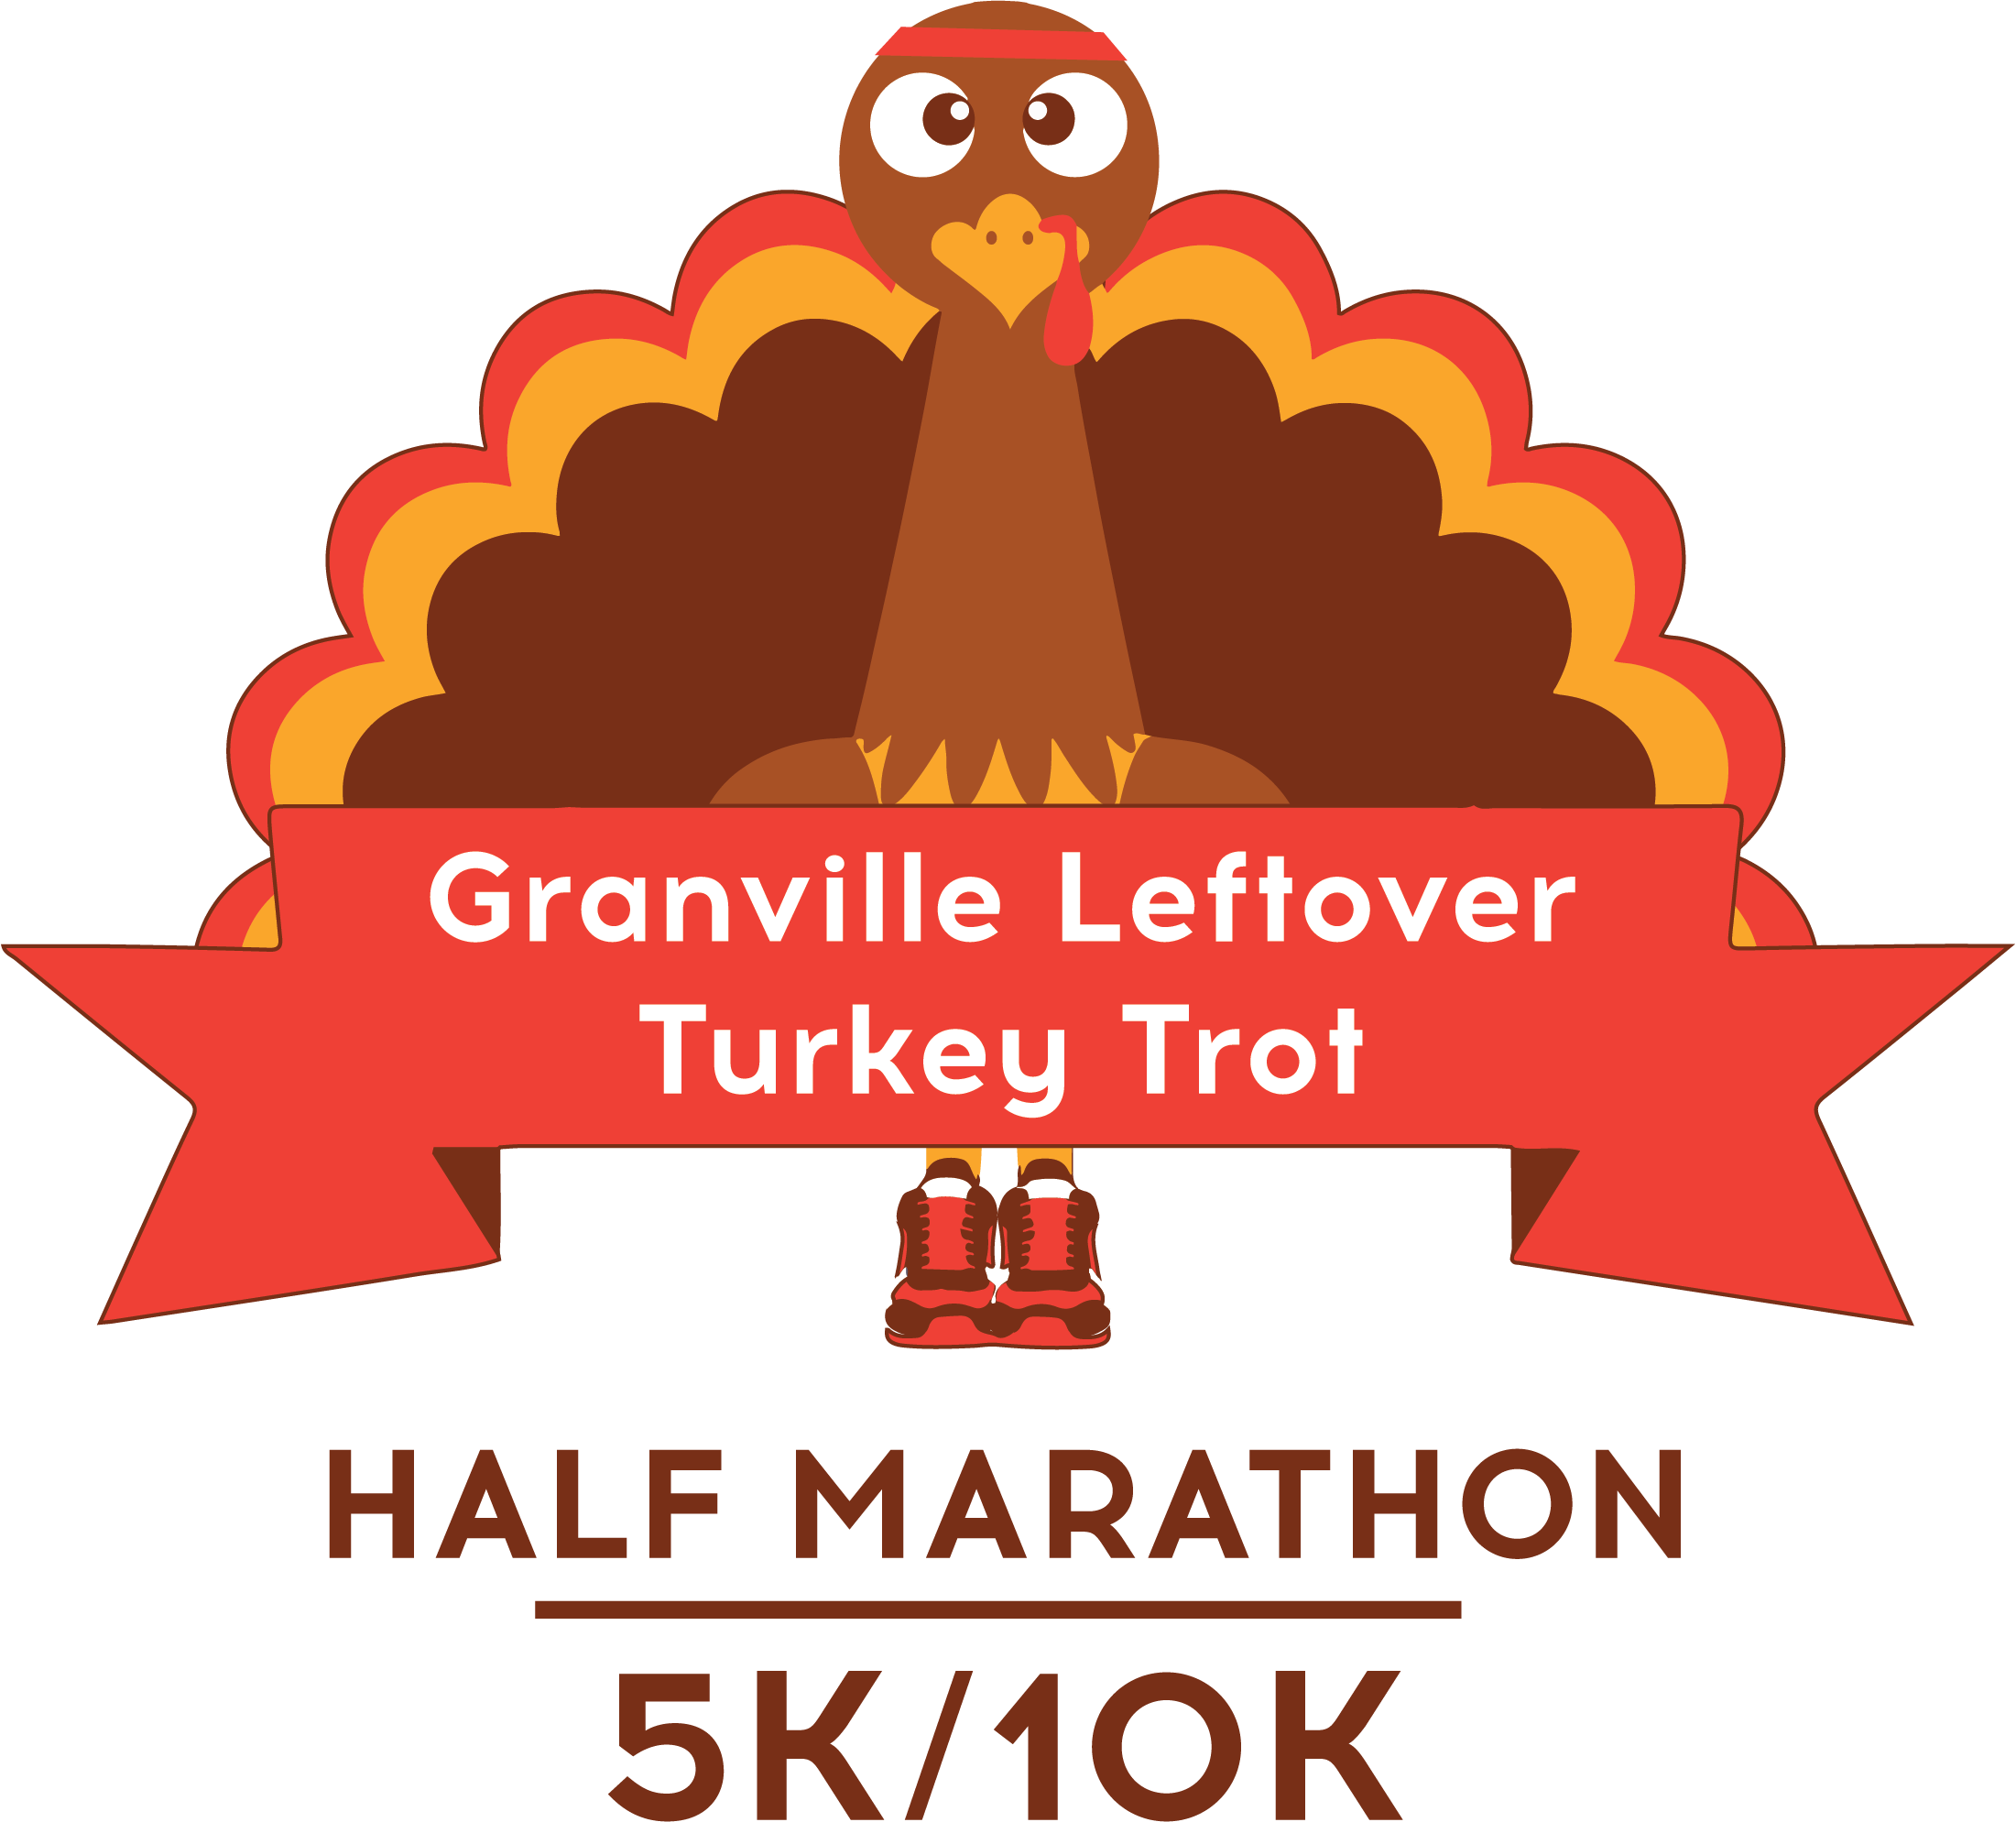 Granville Leftover Turkey Trot Logo Half Marathon, 10k and 5k Race Event in Ohio